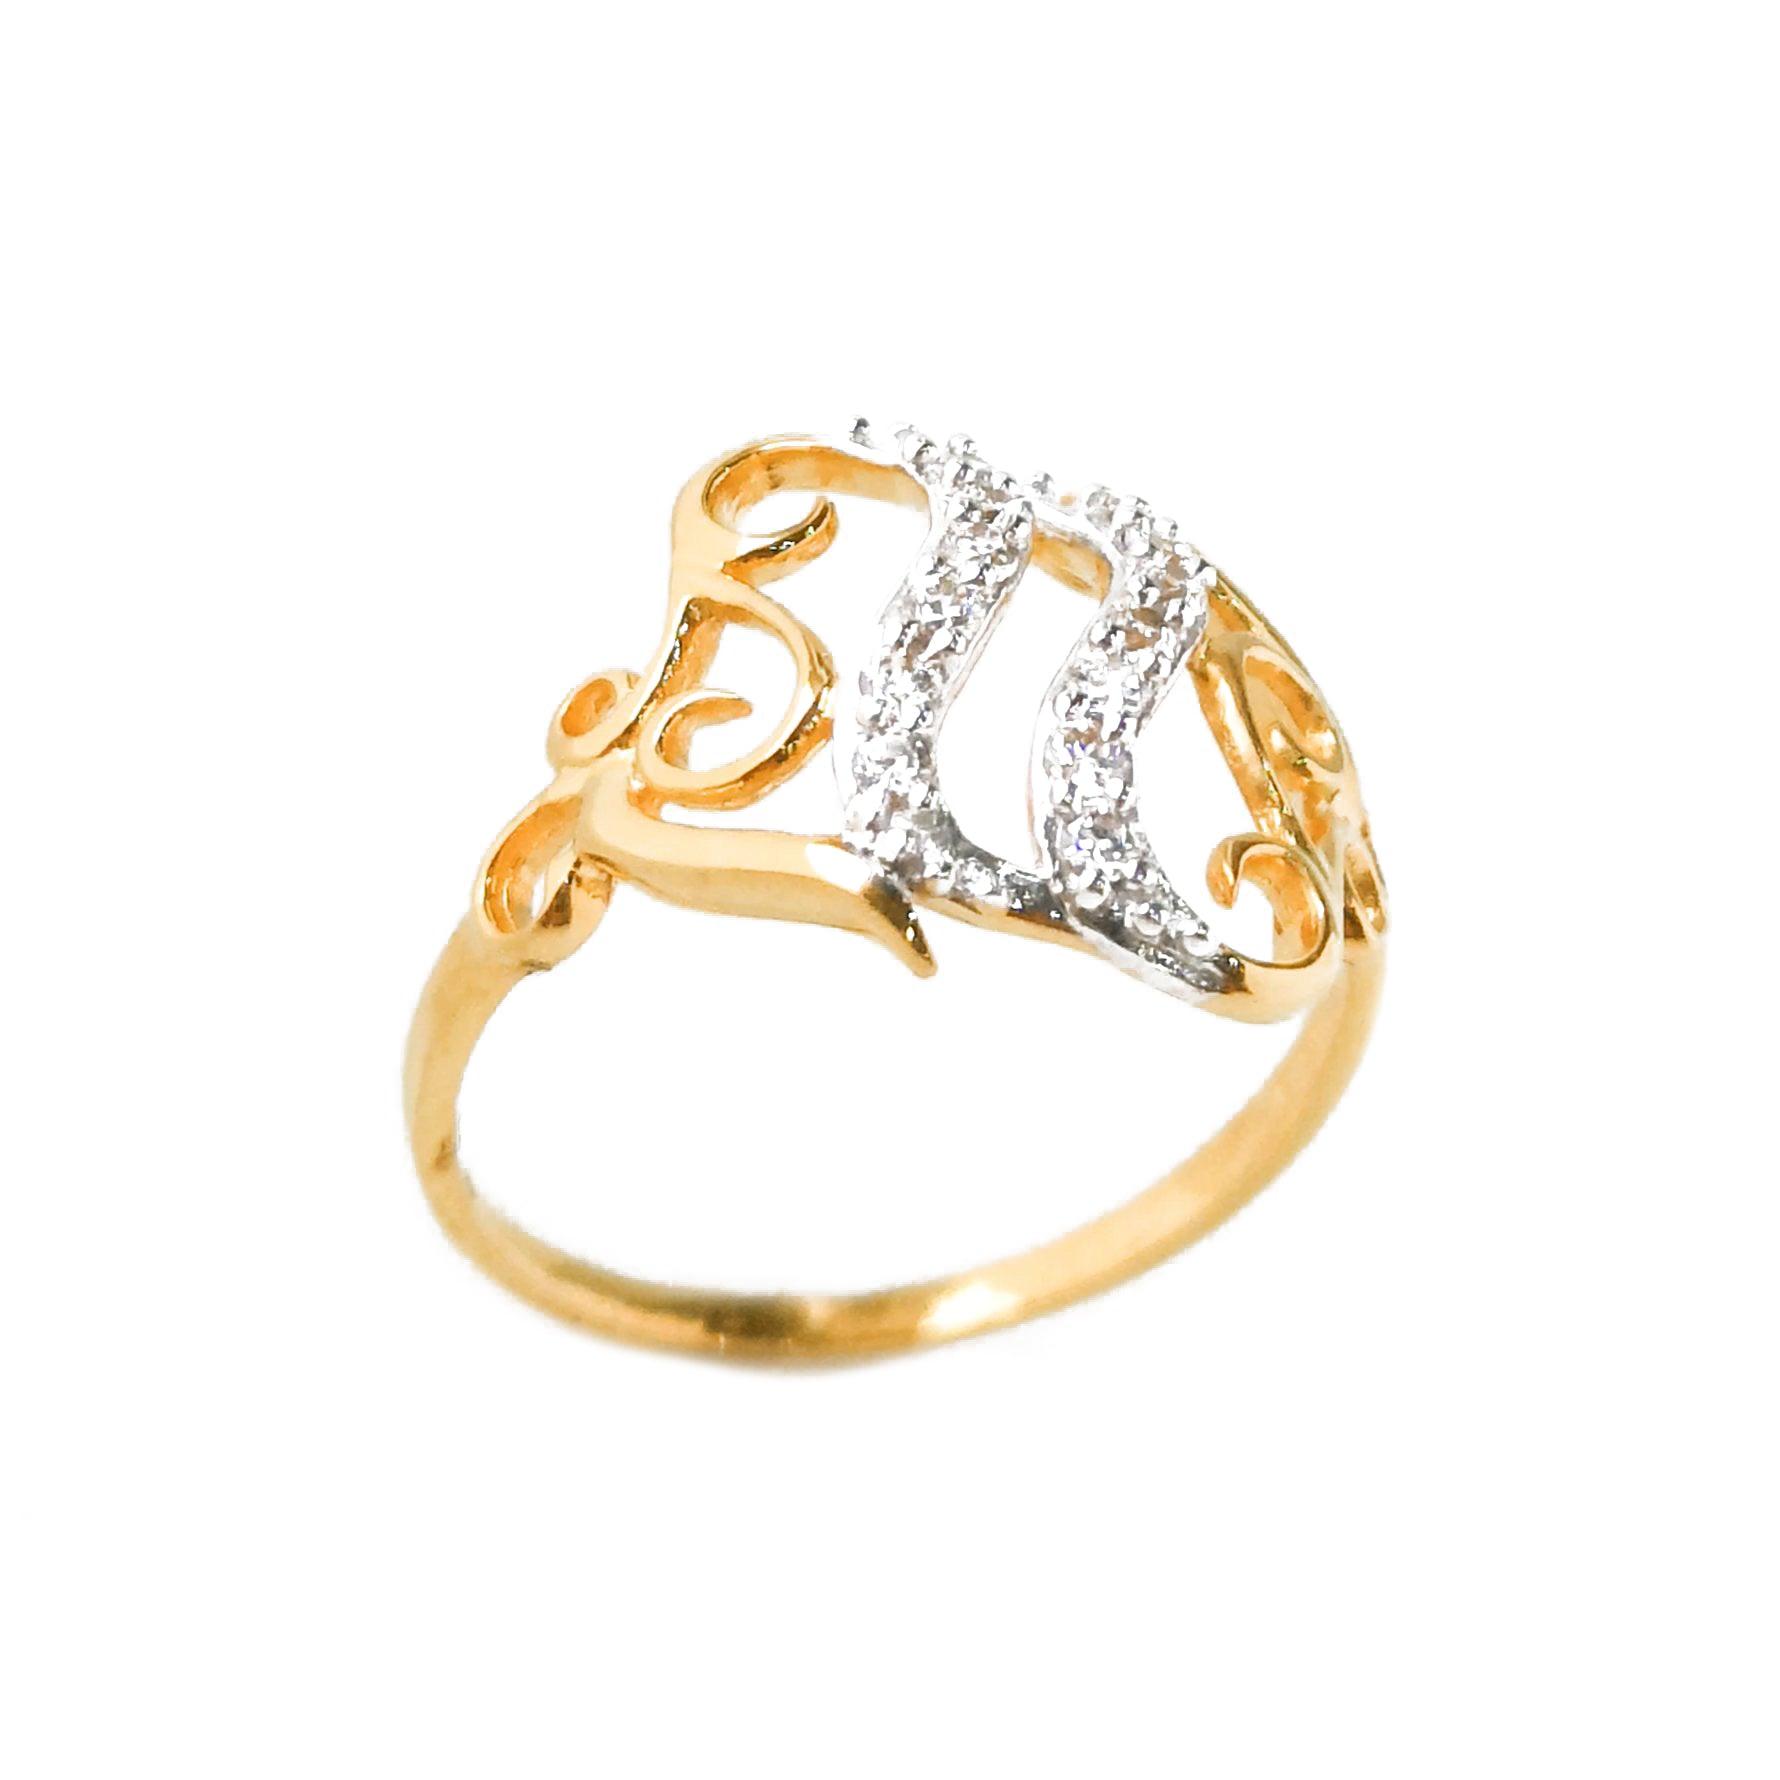 22ct Gold Dress Ring with Swarovski Zirconias LR15388 - Minar Jewellers